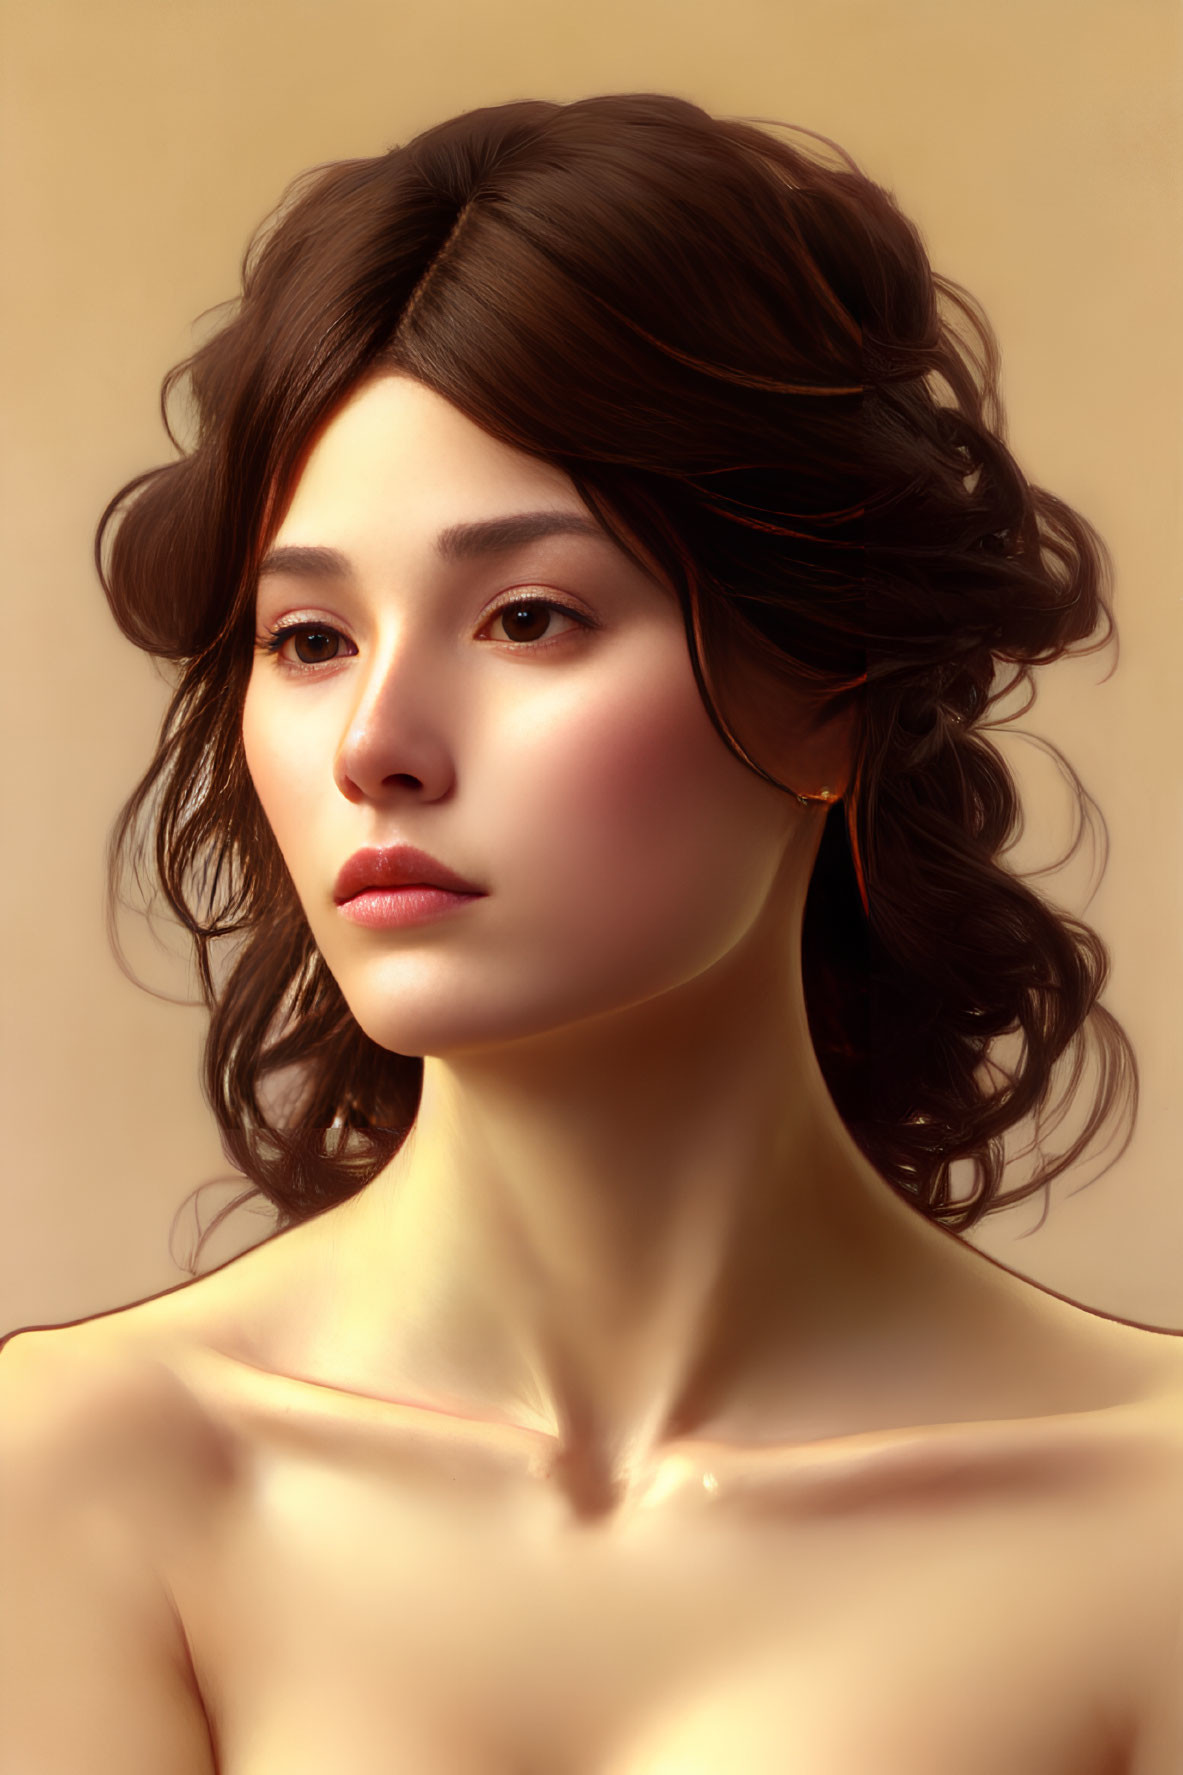 Dark-haired woman with fair skin in soft-lit portrait